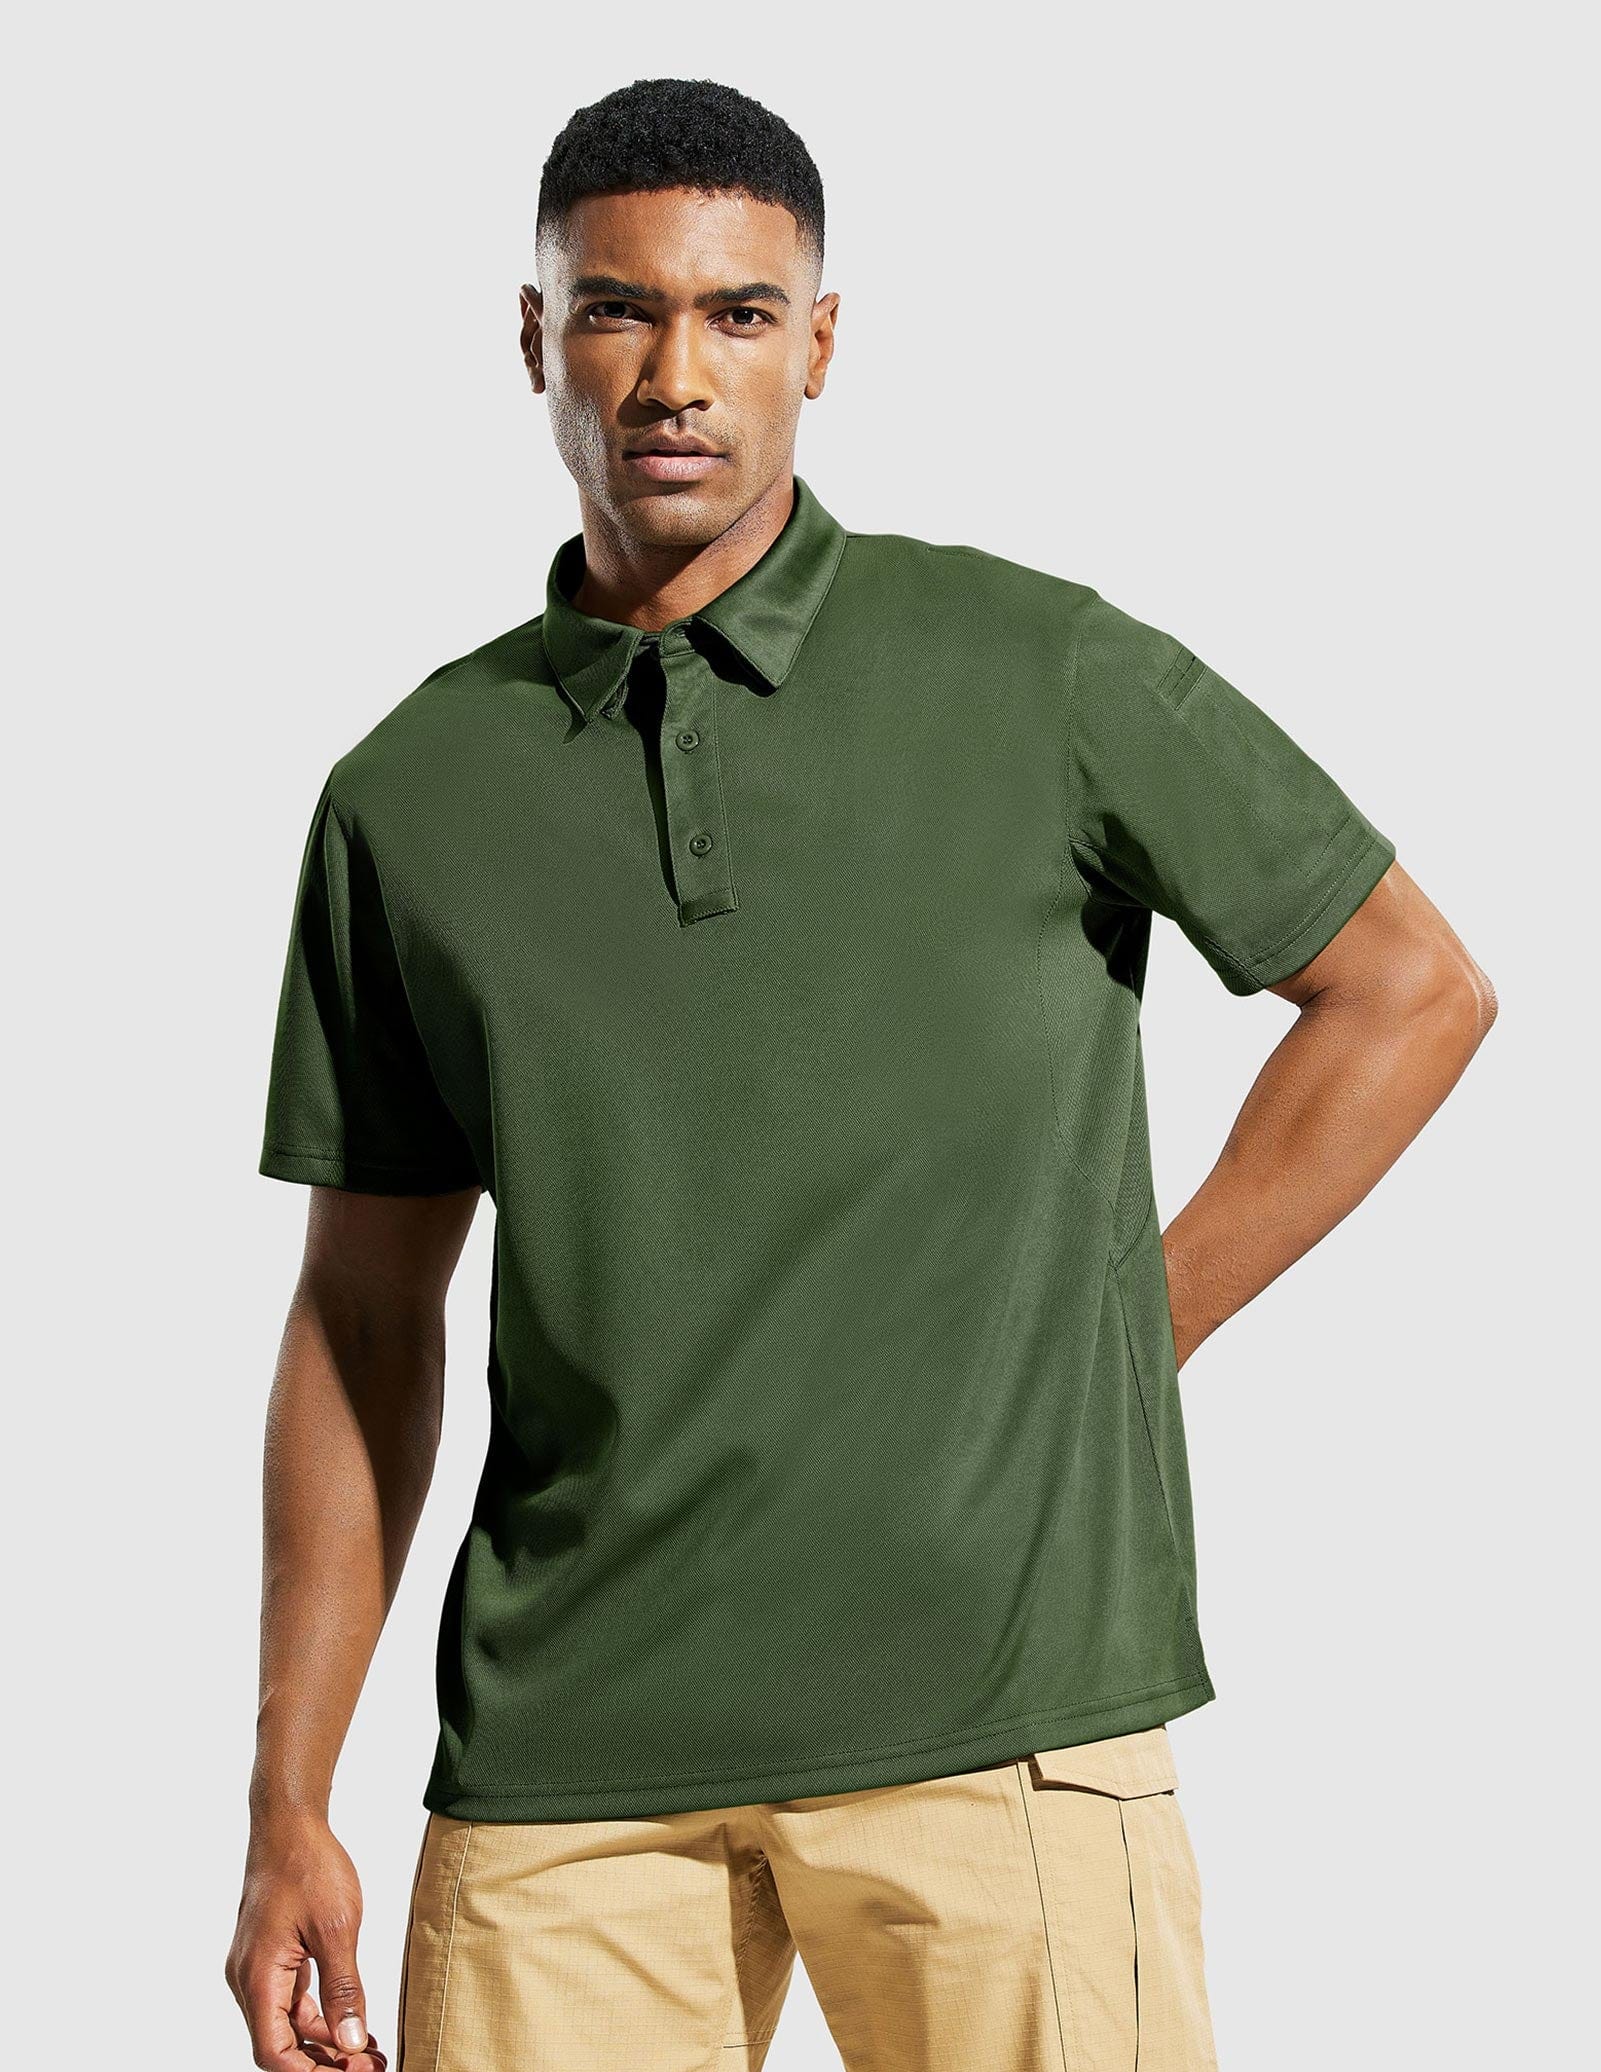 Tactical Shirt Collared Outdoor MIER Polo Men\'s Shirts